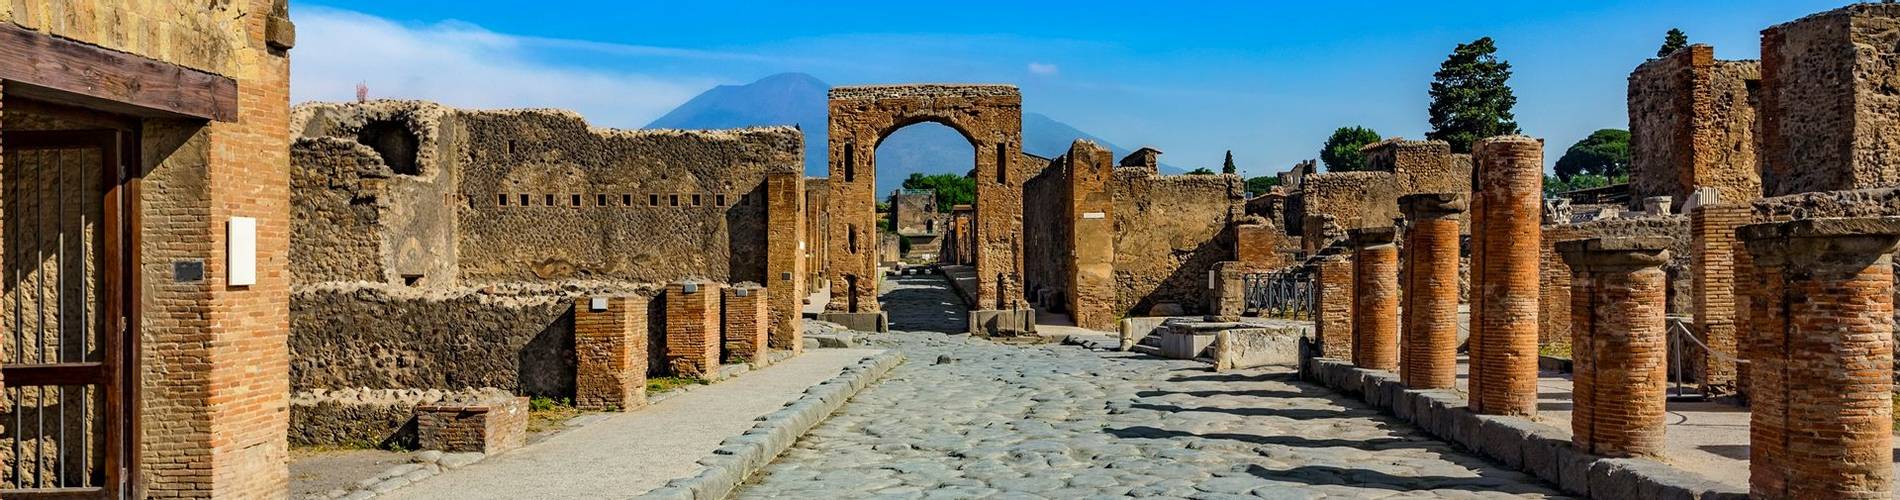 Pompeii.jpg